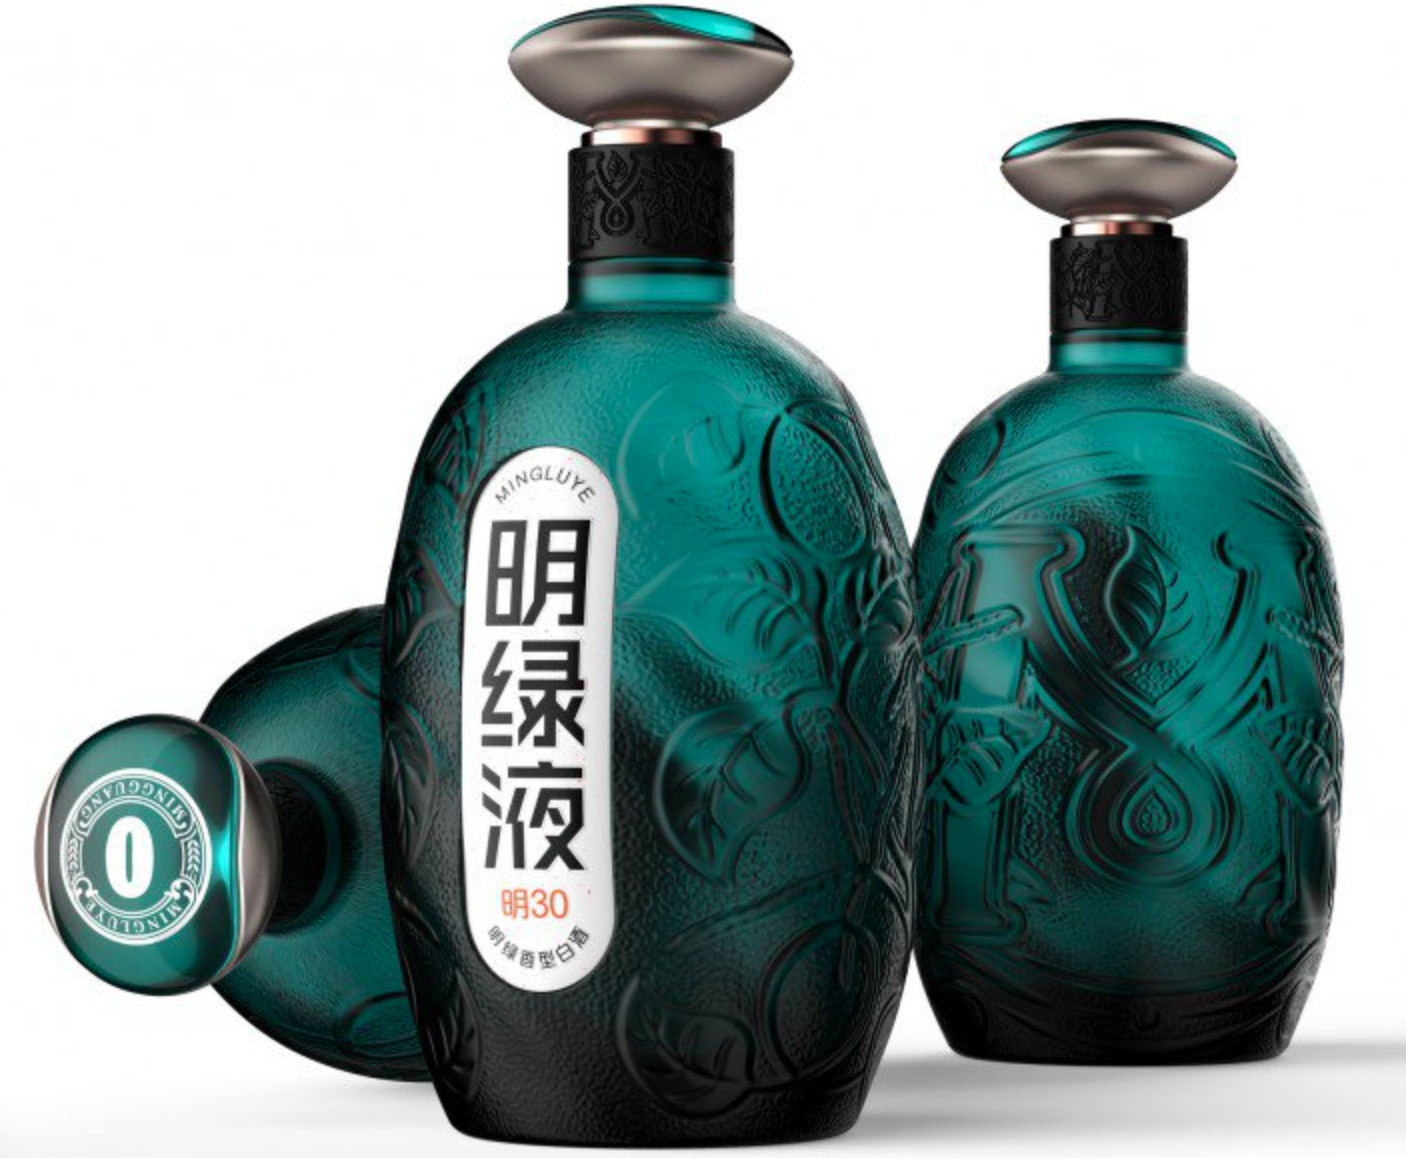 Mingluye Alcoholic Beverage Packaging by Wen Liu, Bo Zheng and Weijie Kang